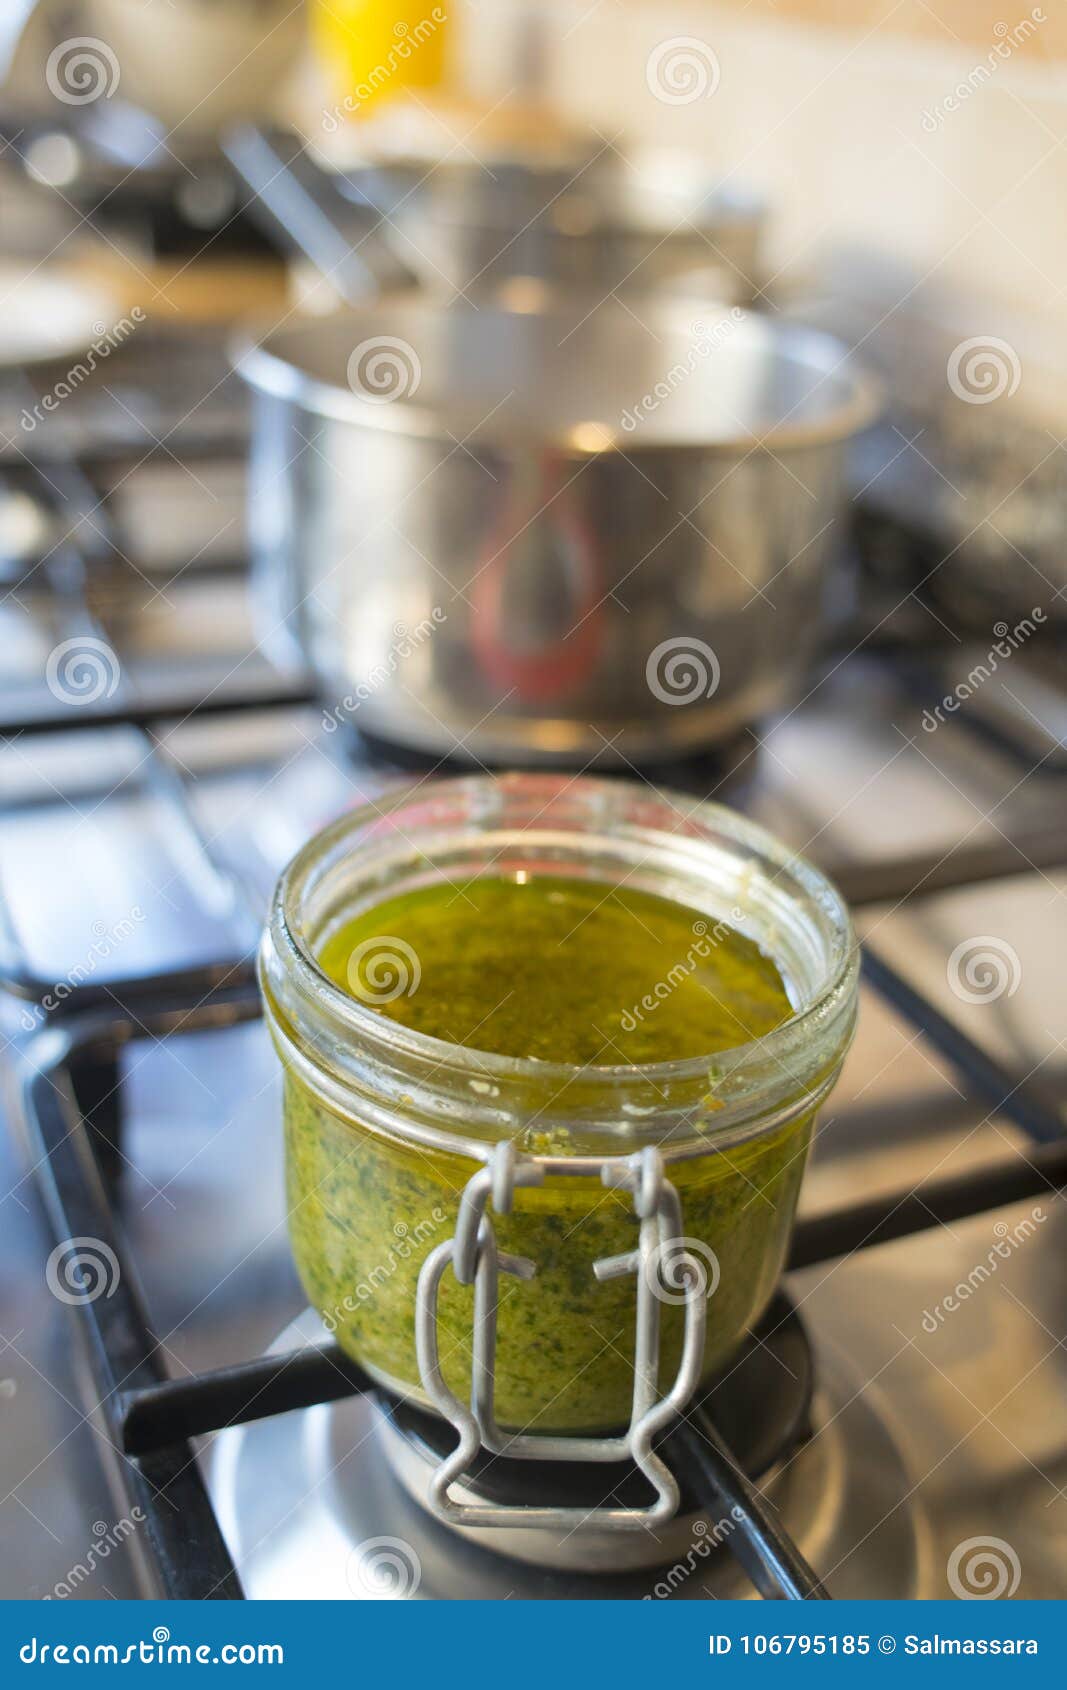 Homemade basil pesto sauce stock image. Image of food - 106795185